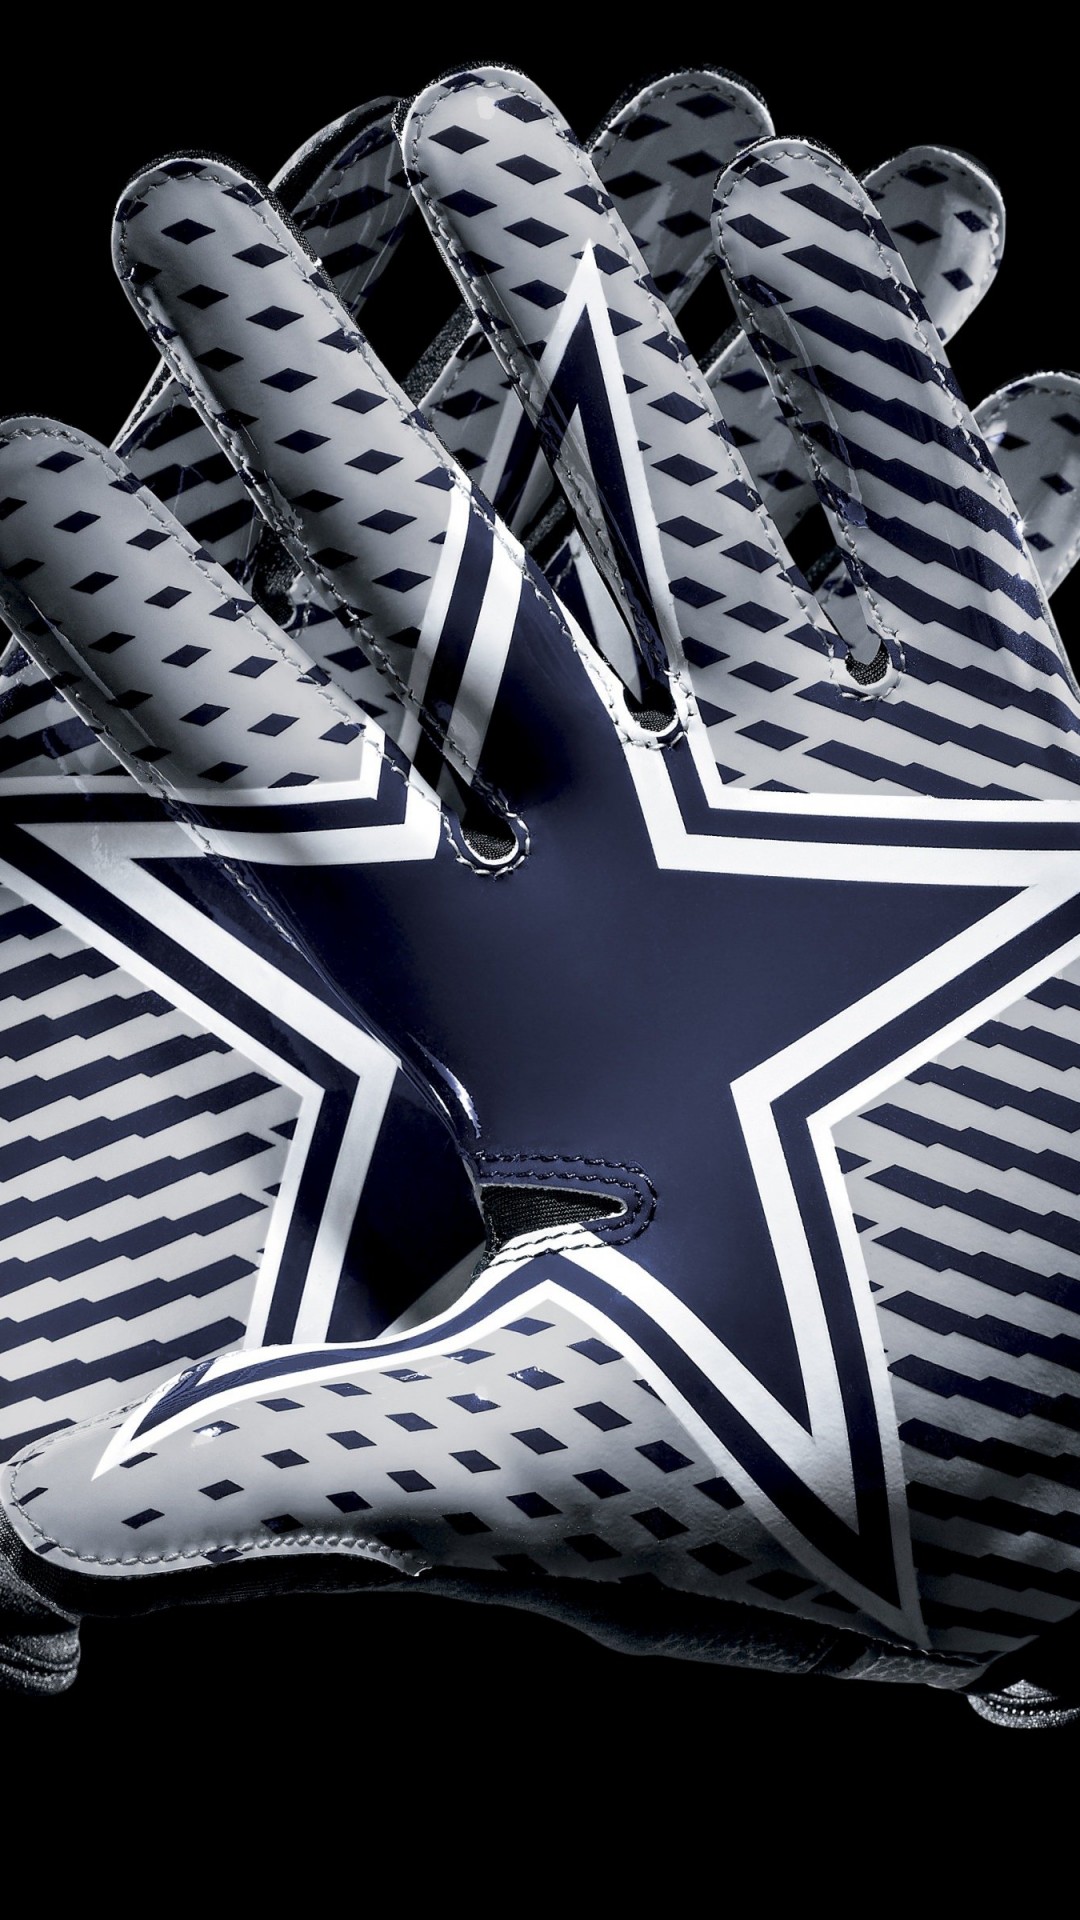 Dallas Cowboys Gloves Wallpaper for Google Nexus 5